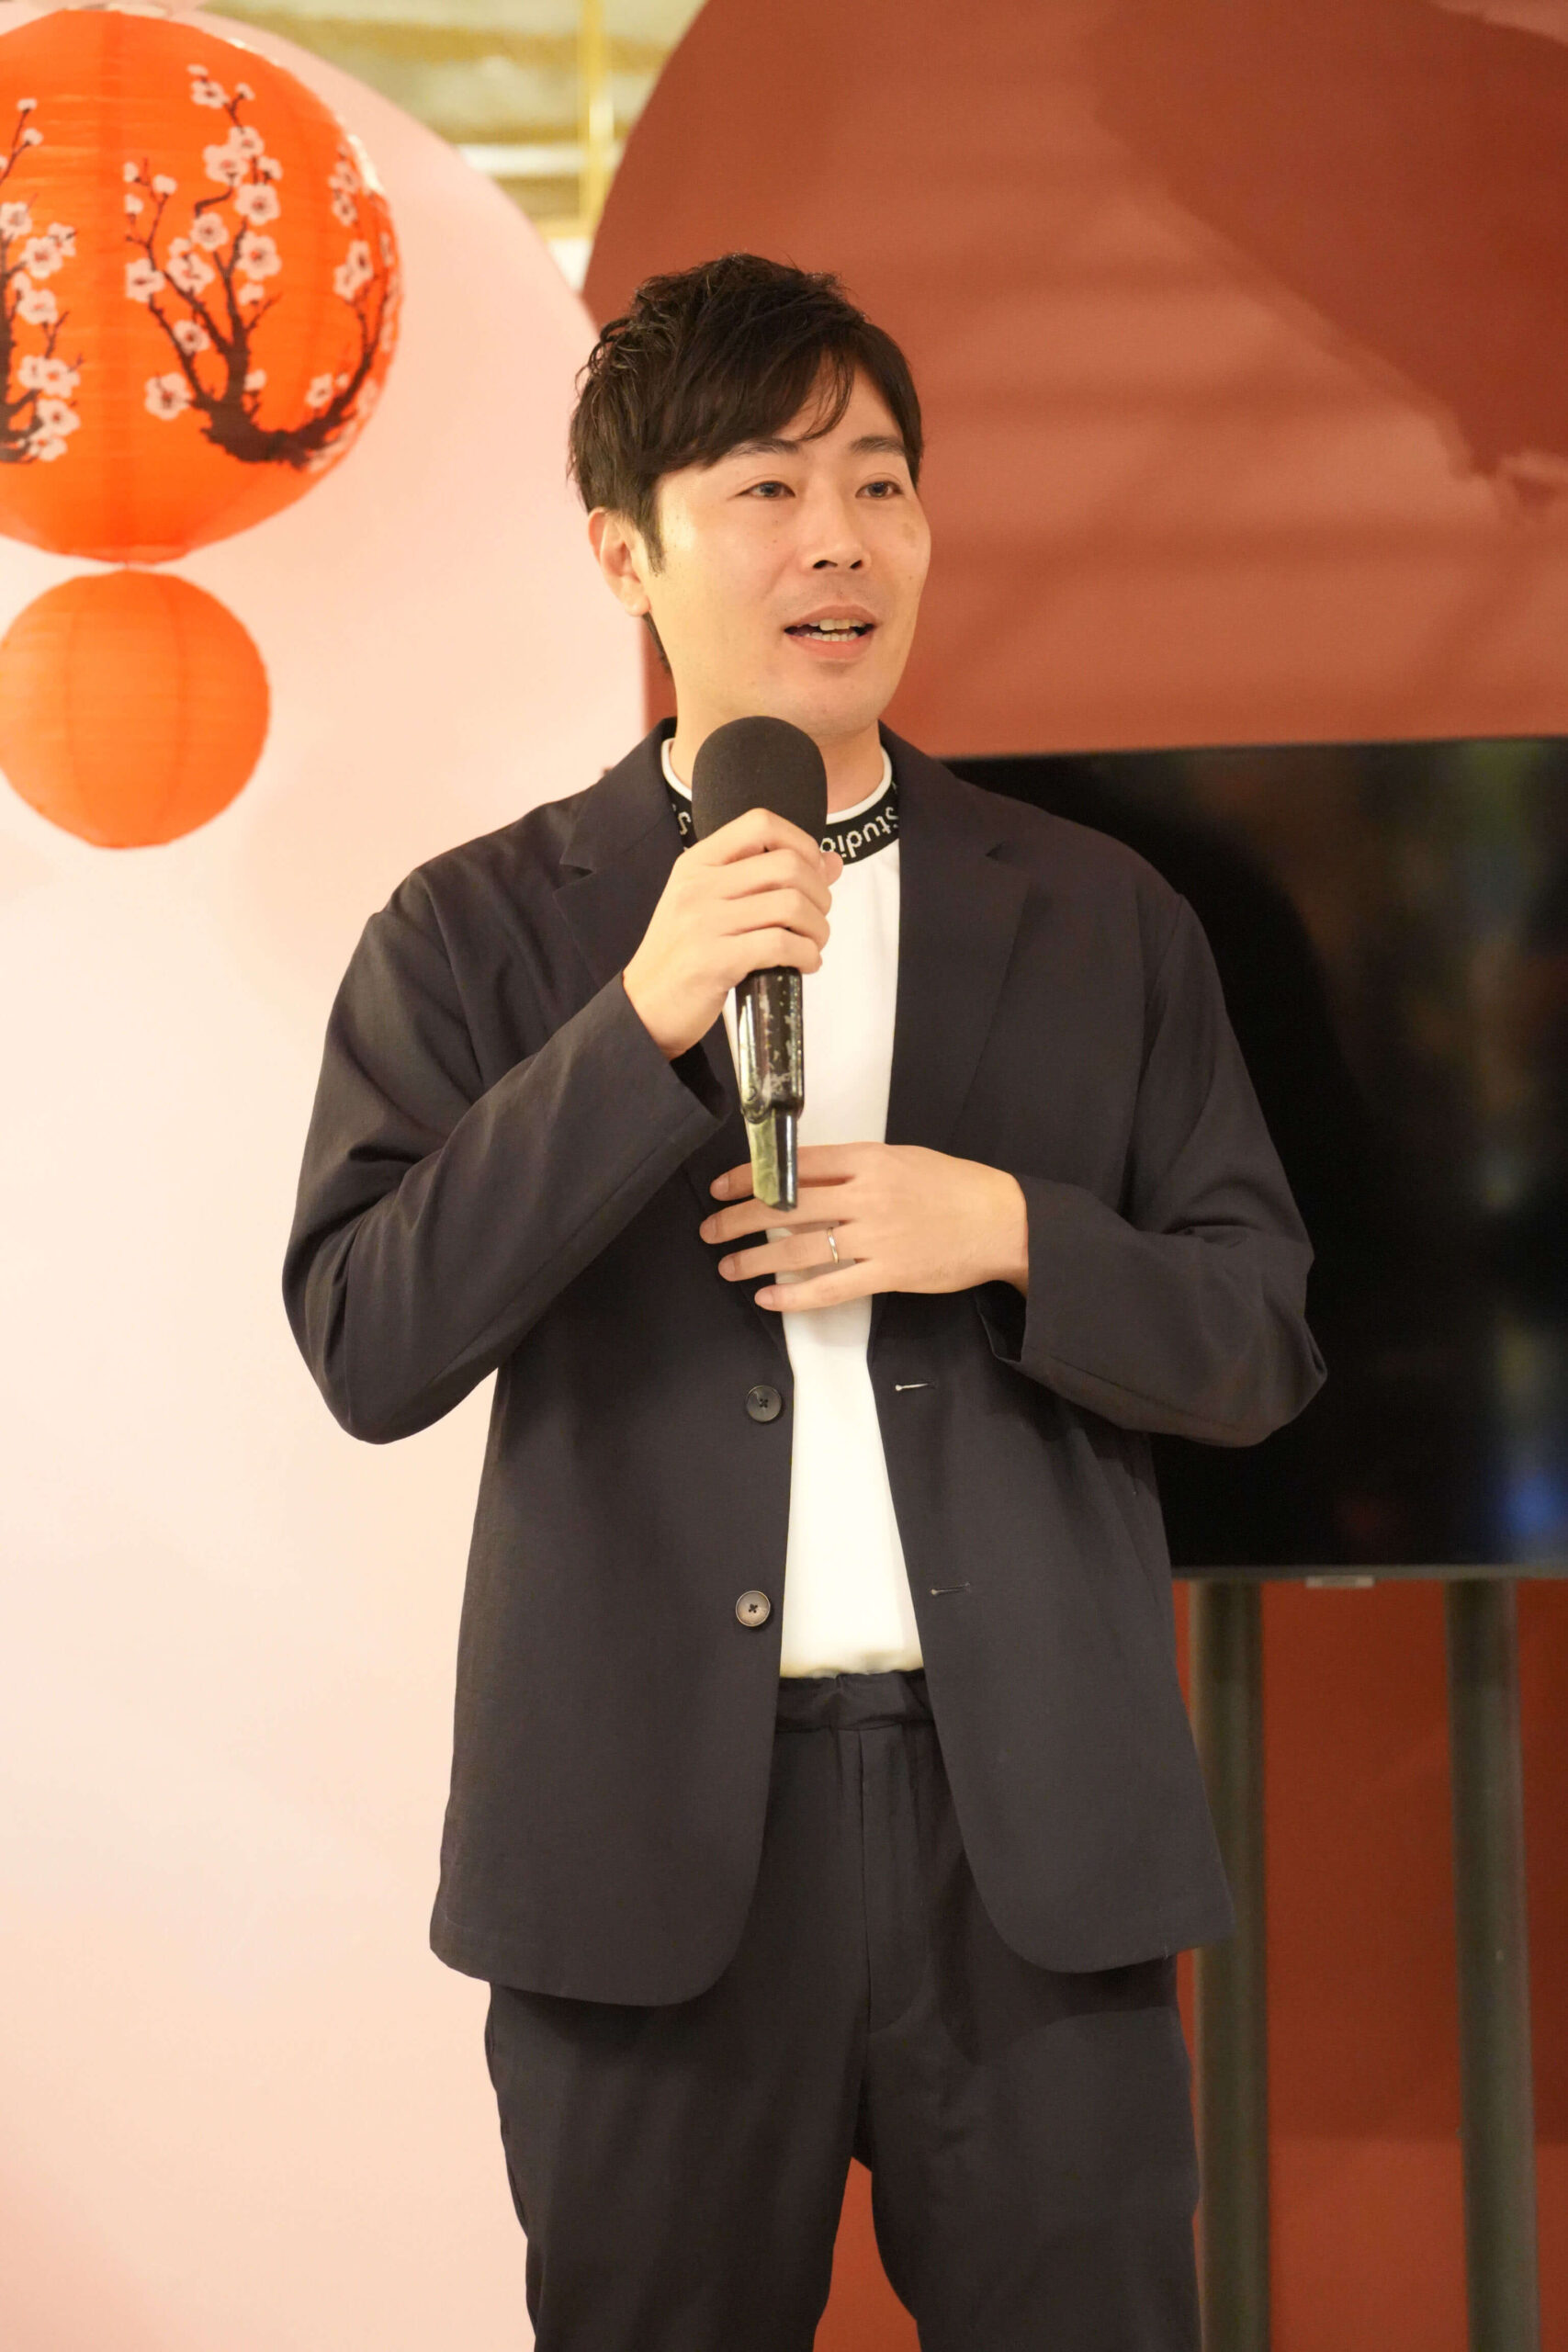 General Manager of Endo Lighting Philippines, Mr. Yusuke Goto